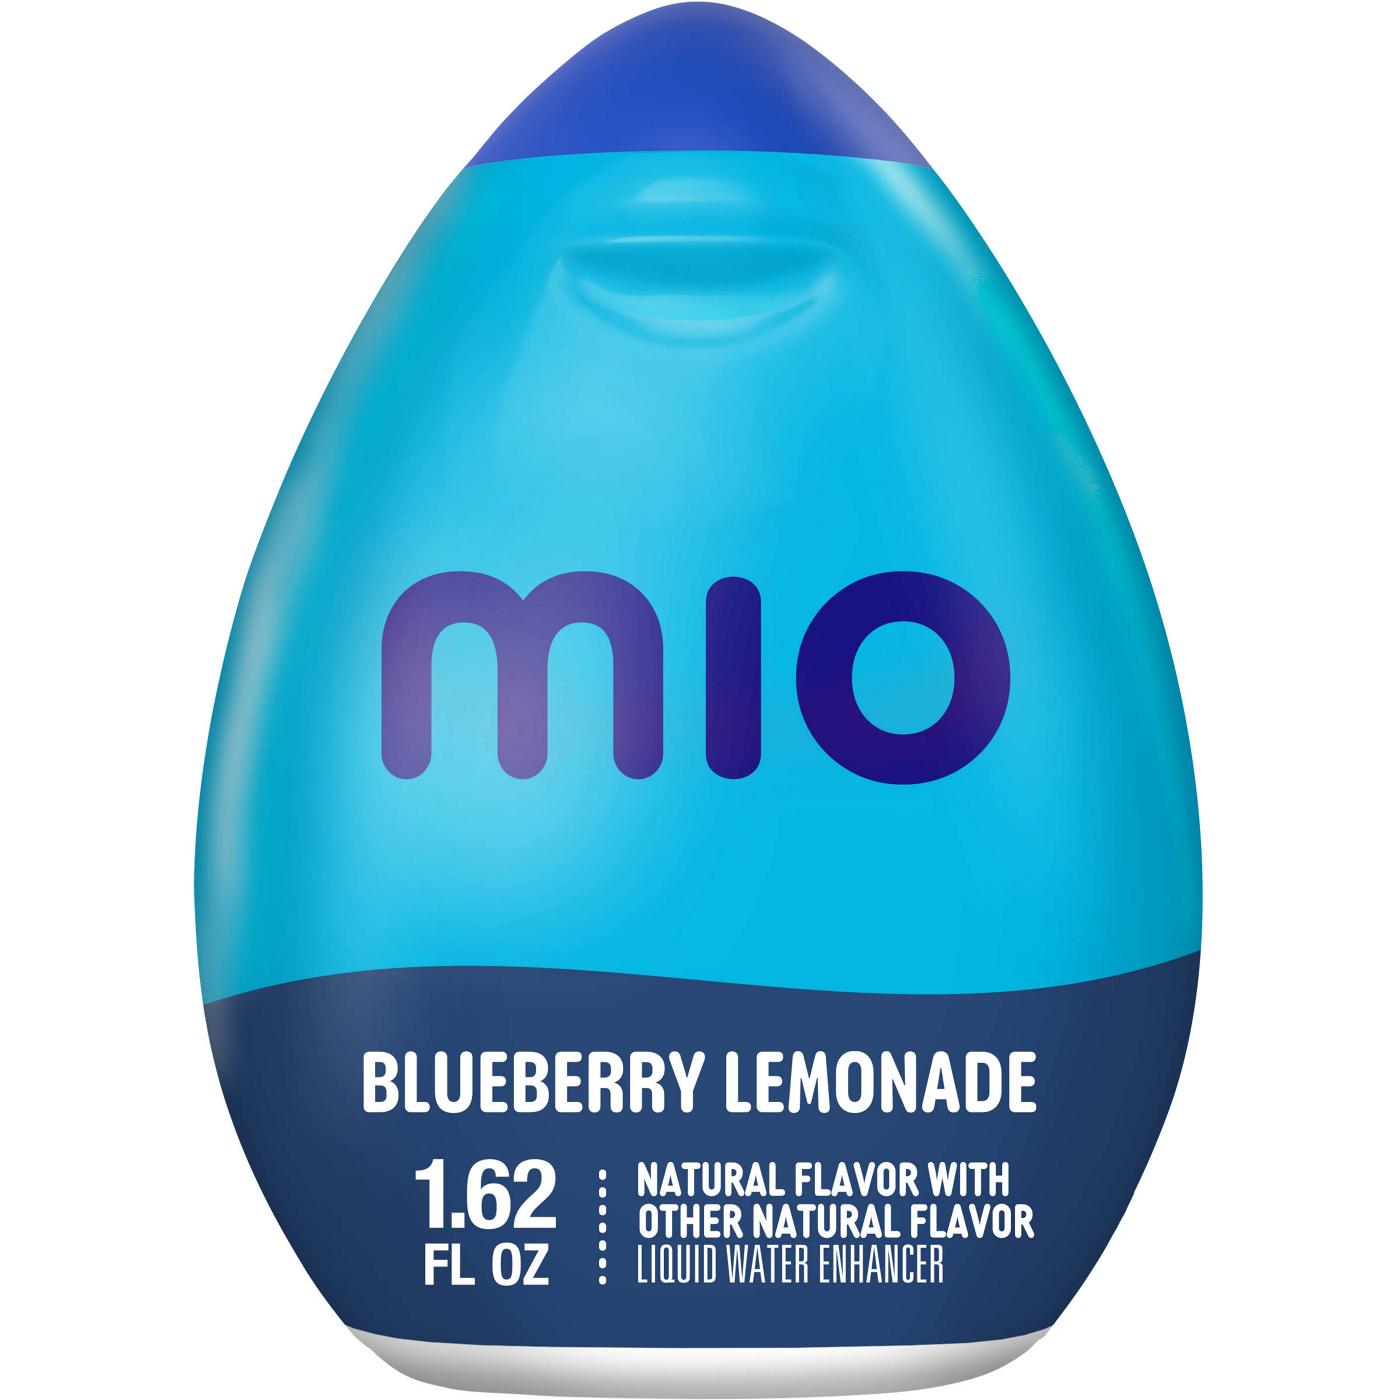 Mio Blueberry Lemonade Liquid Water Enhancer; image 1 of 2